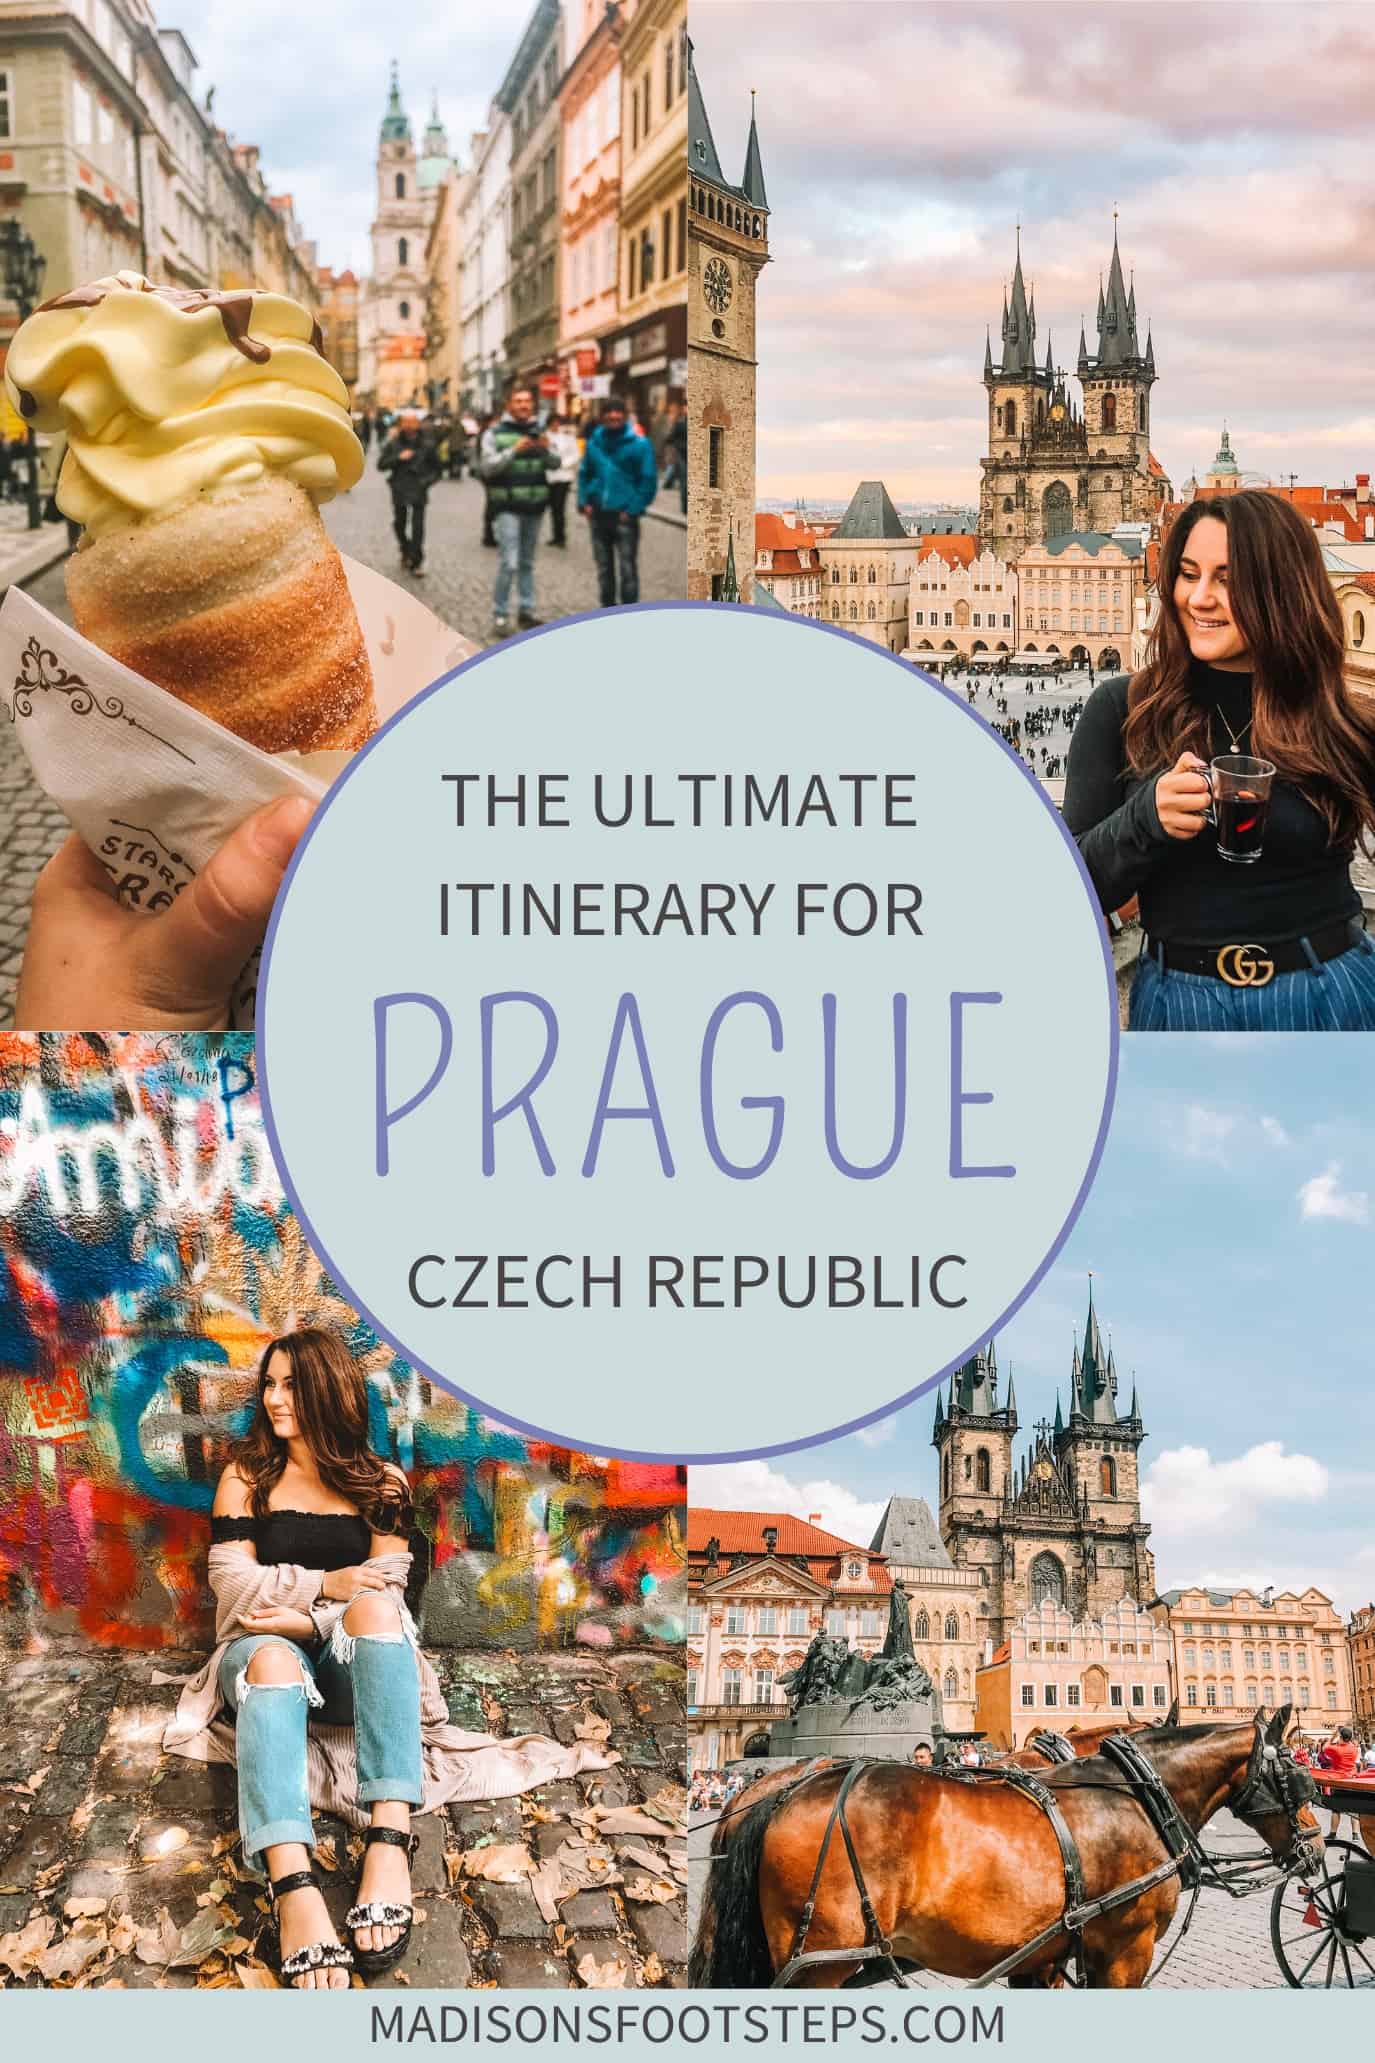 4 days in Prague itinerary Pinterest pin.